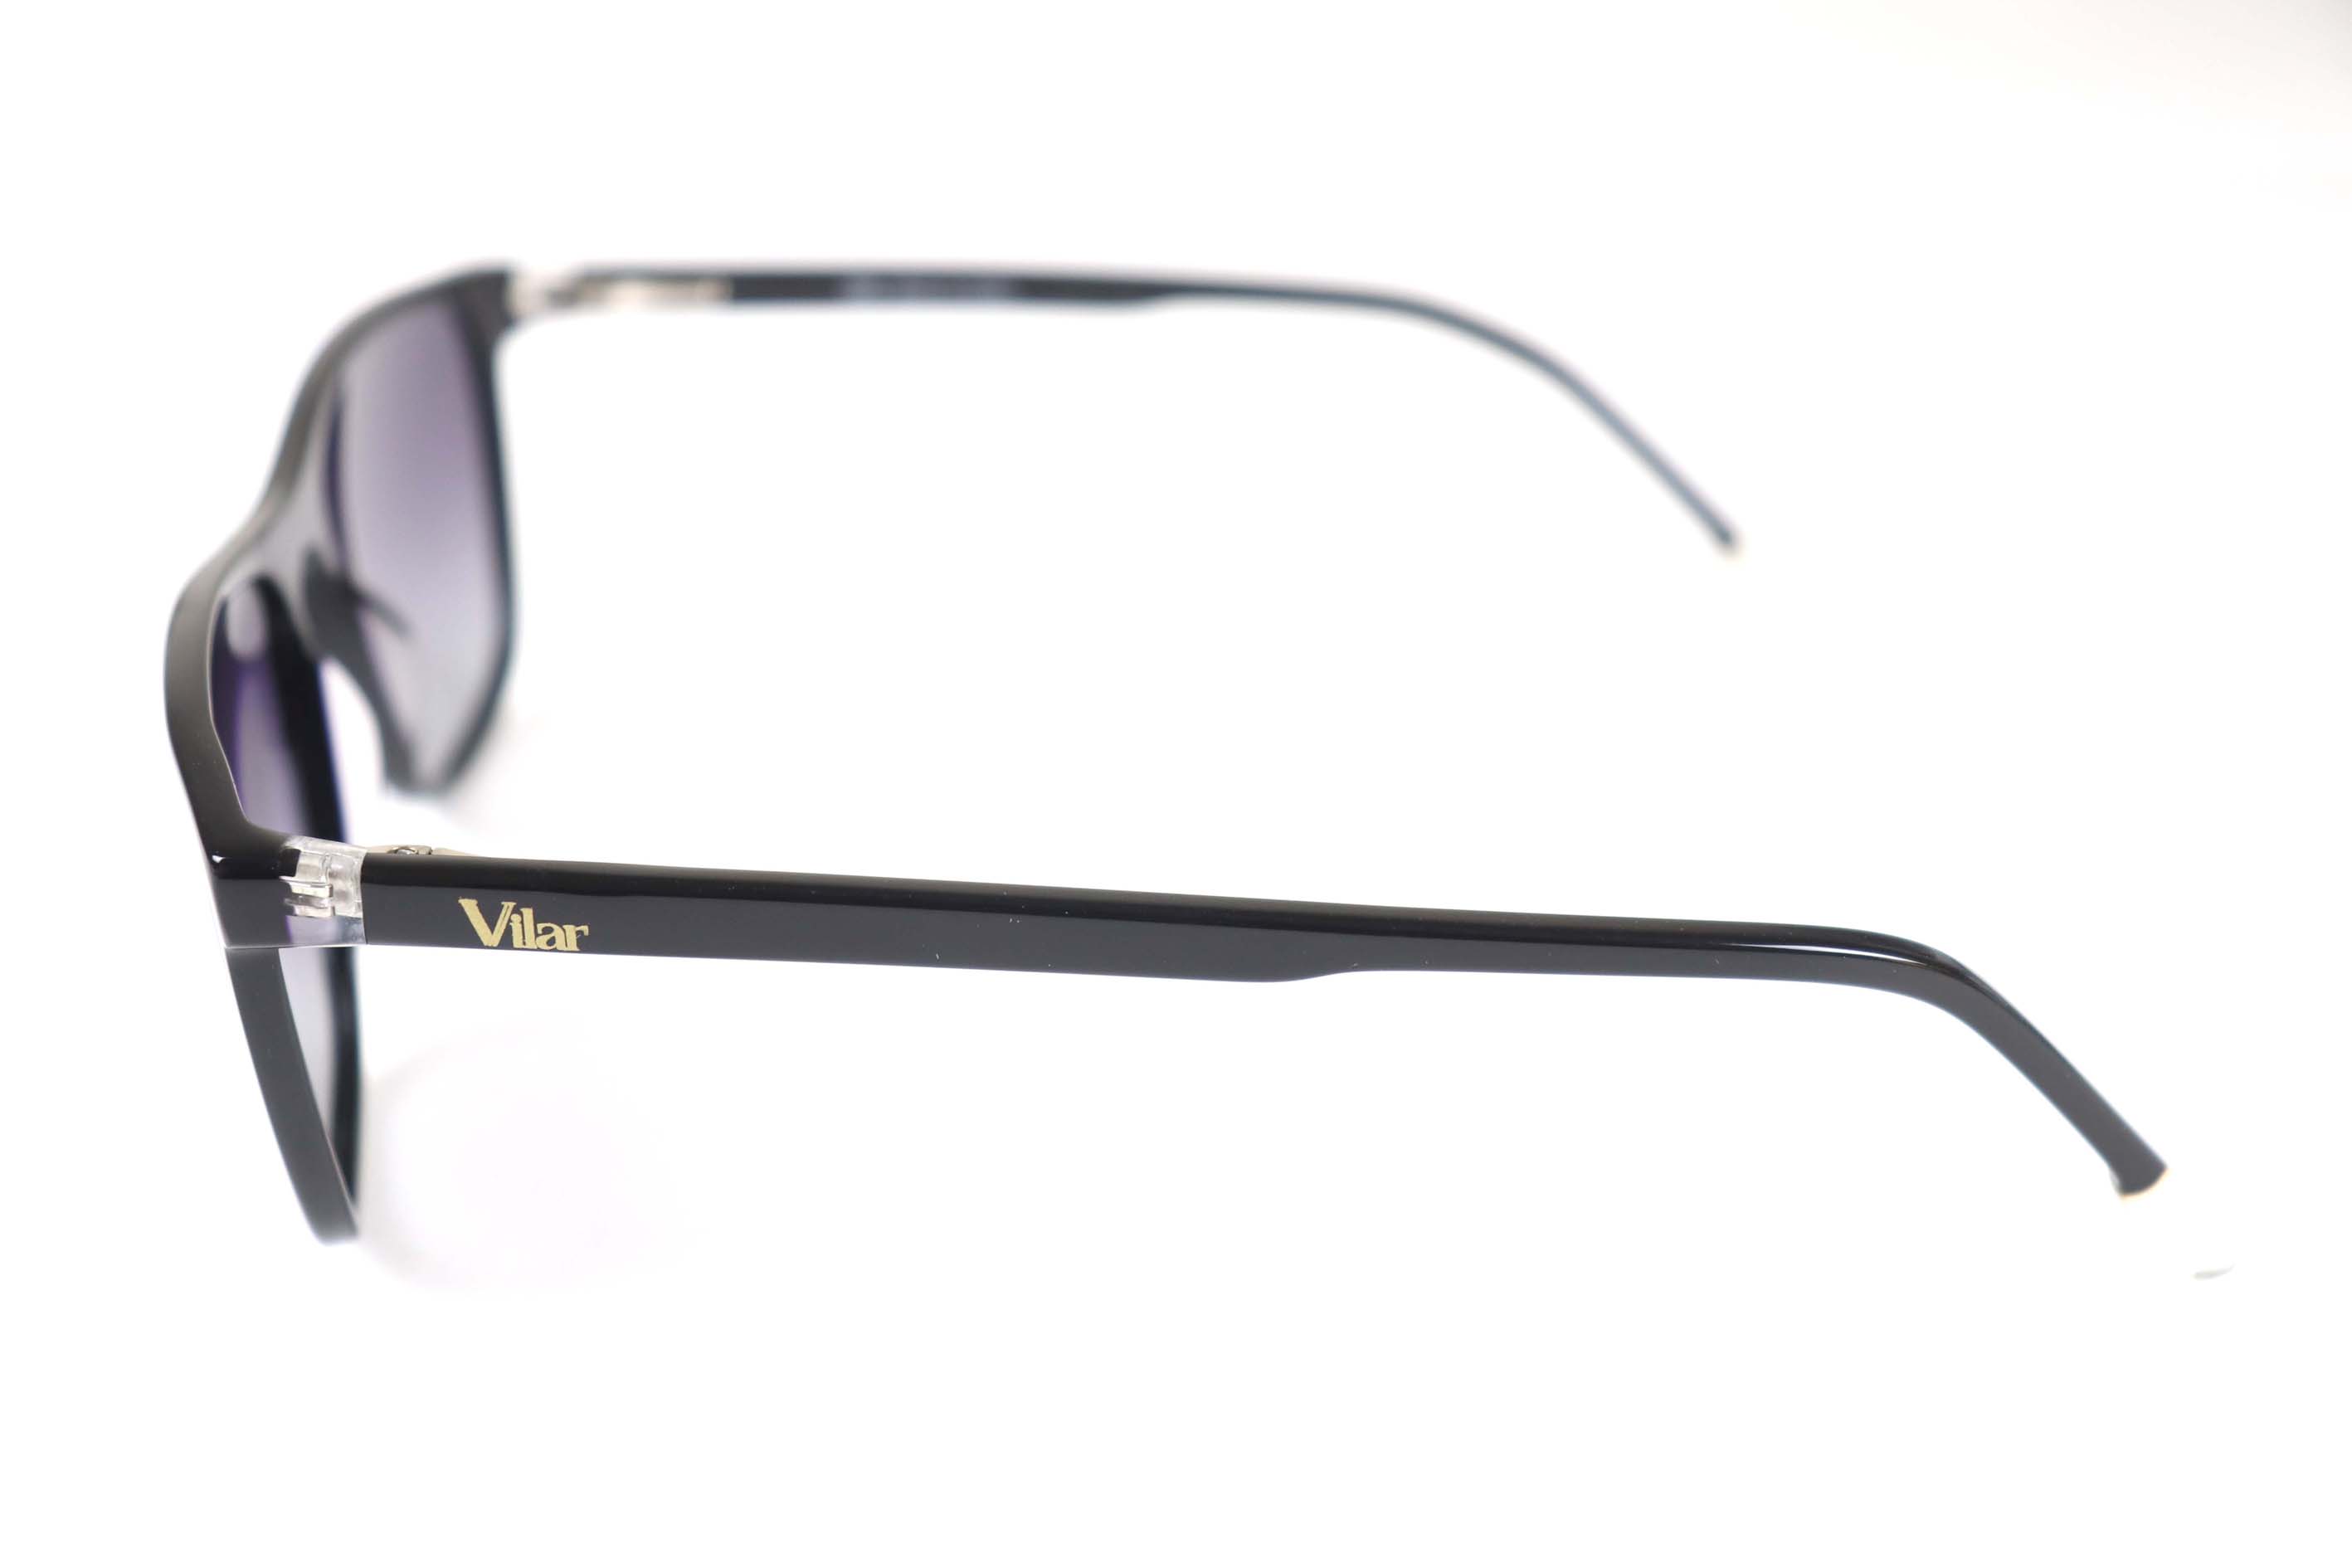 Vilar Sunglasses-OR-coo2-s-19407